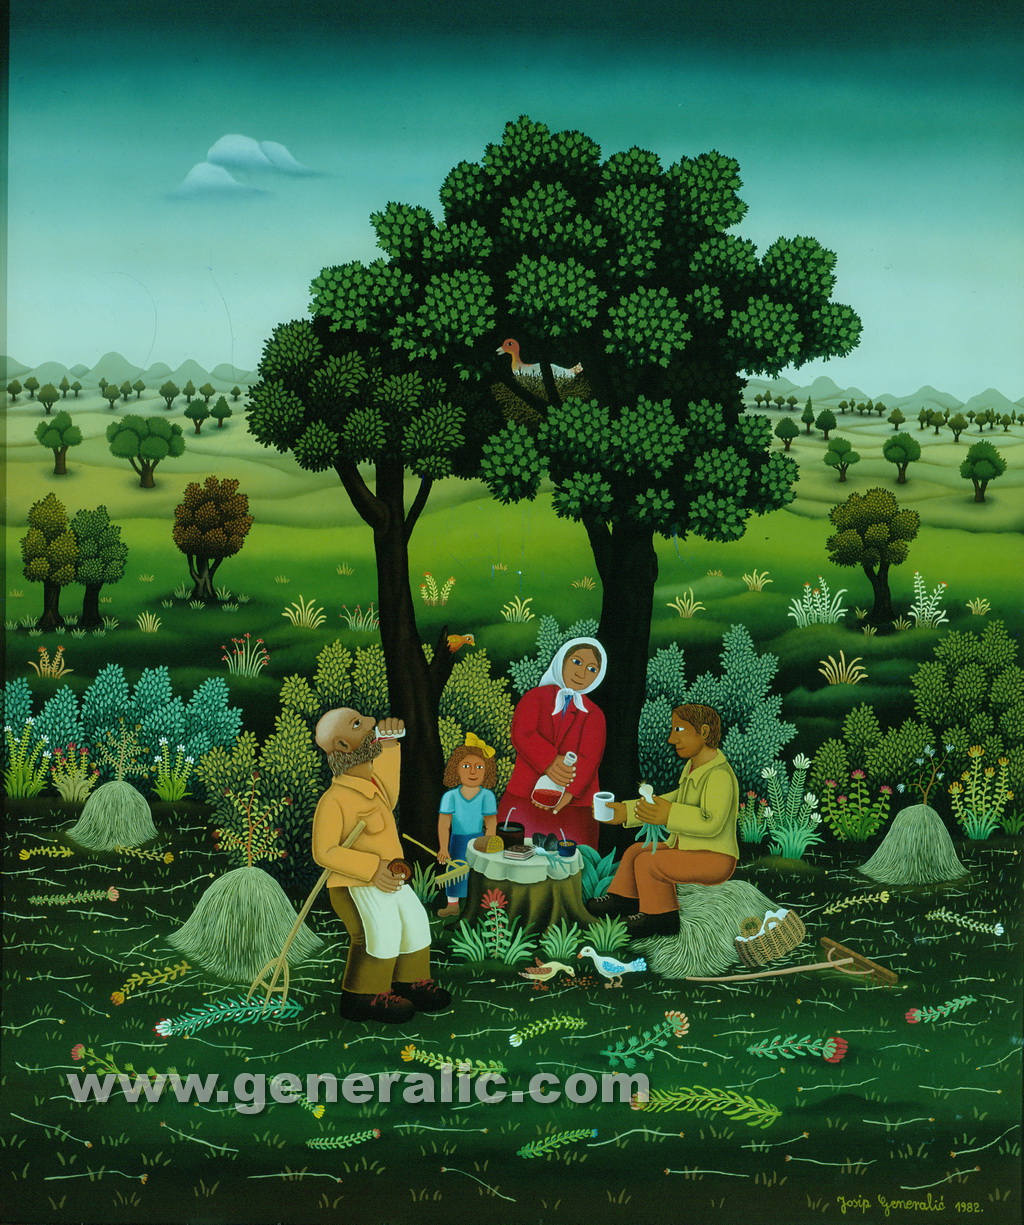 Josip Generalic, 1982, Family picnic, oil on glass, 120x100 cm